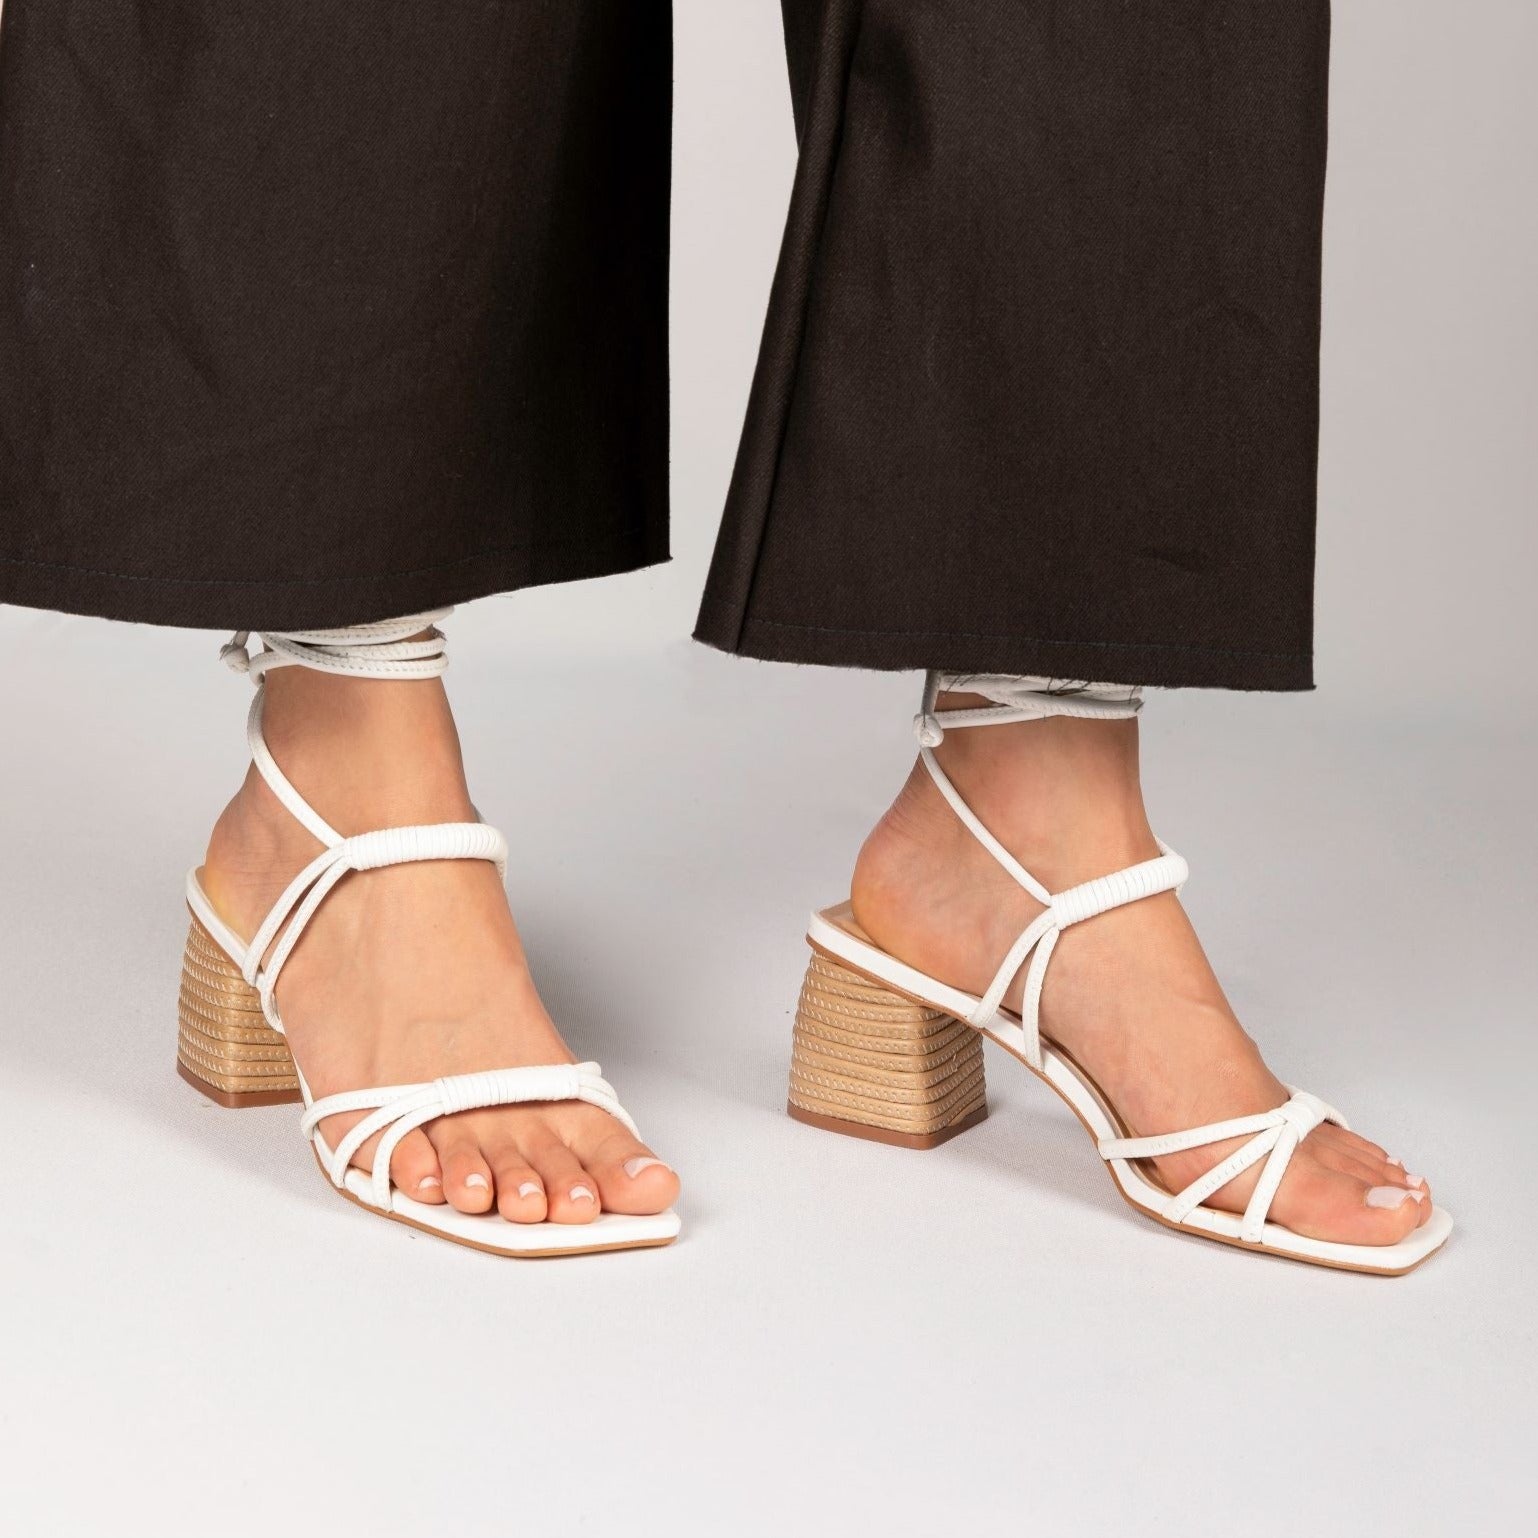 Samay Sandals - White Heels TARBAY   